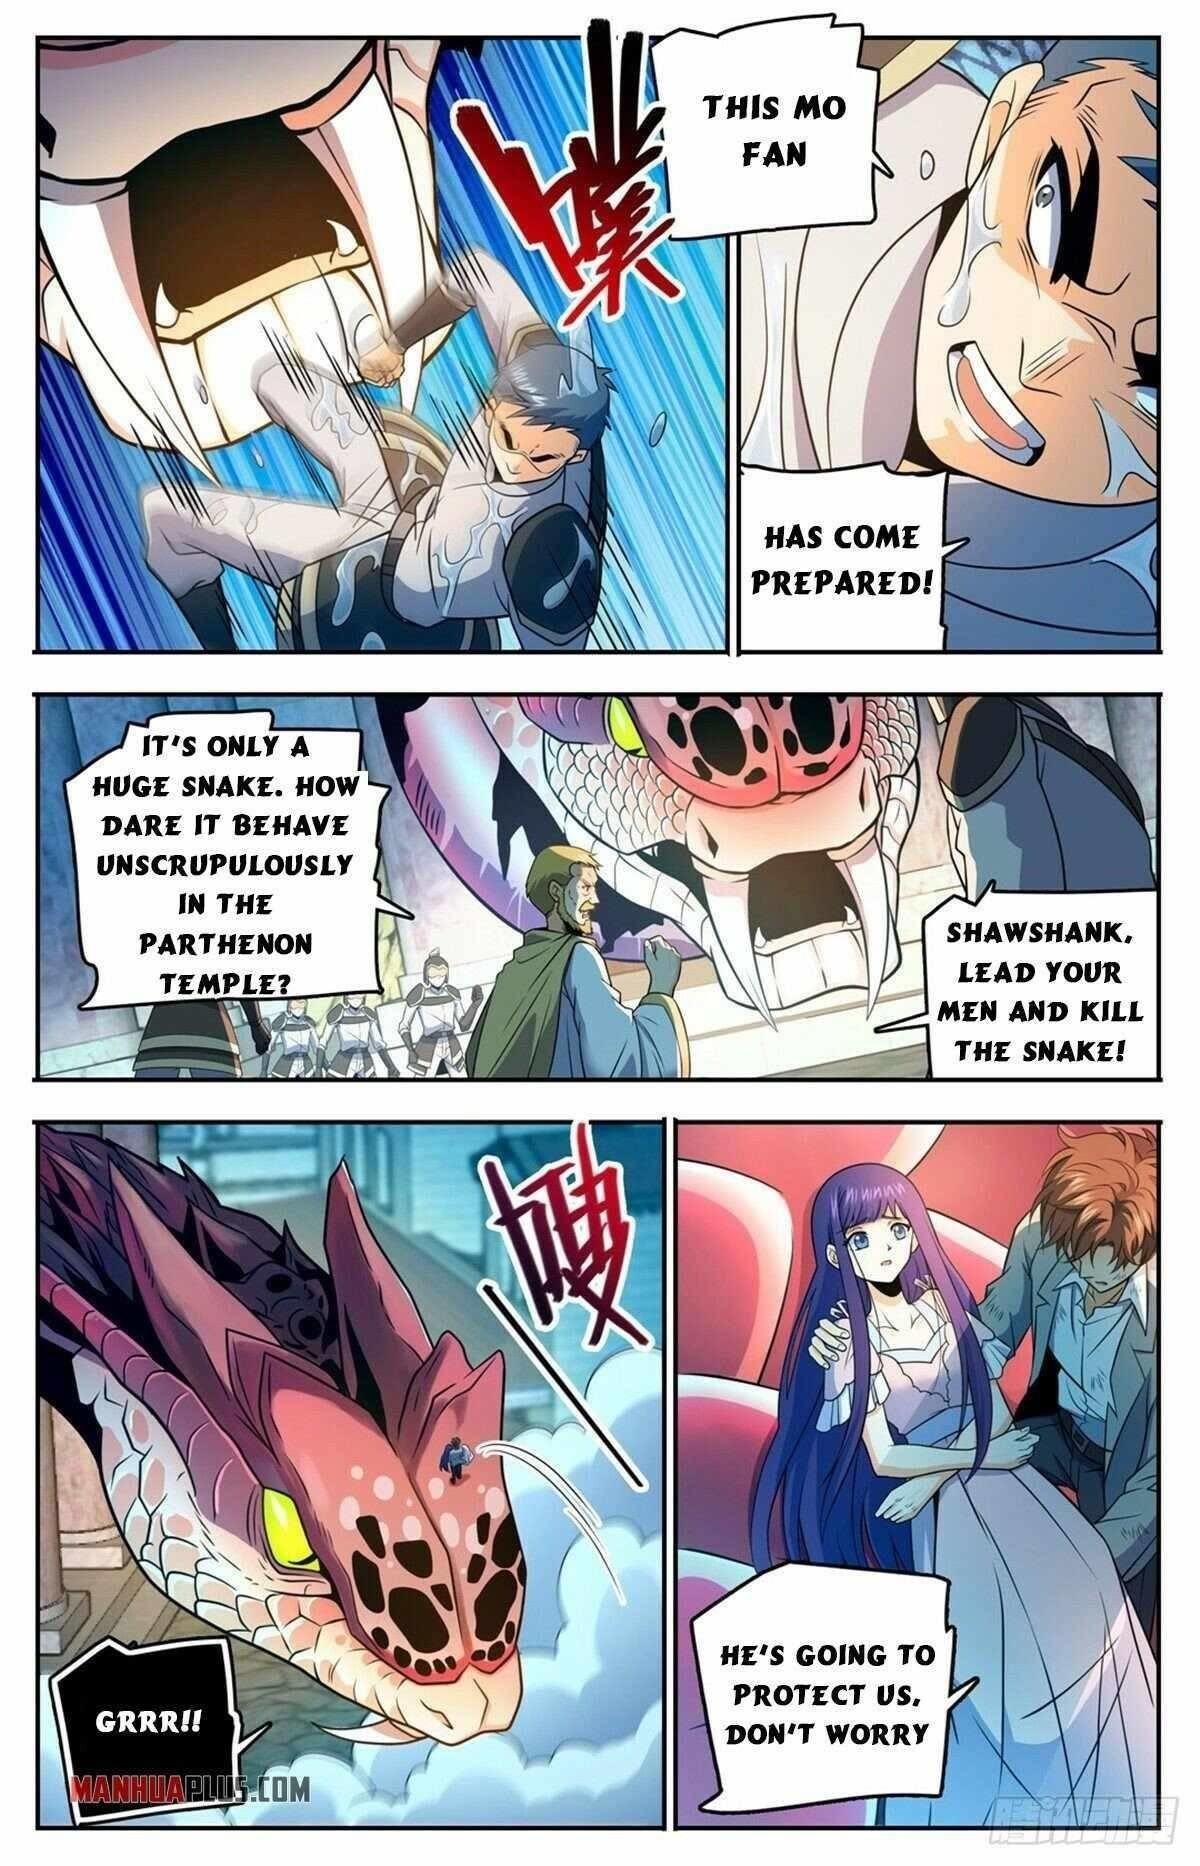 Versatile Mage Chapter 753 page 8 - Mangakakalot